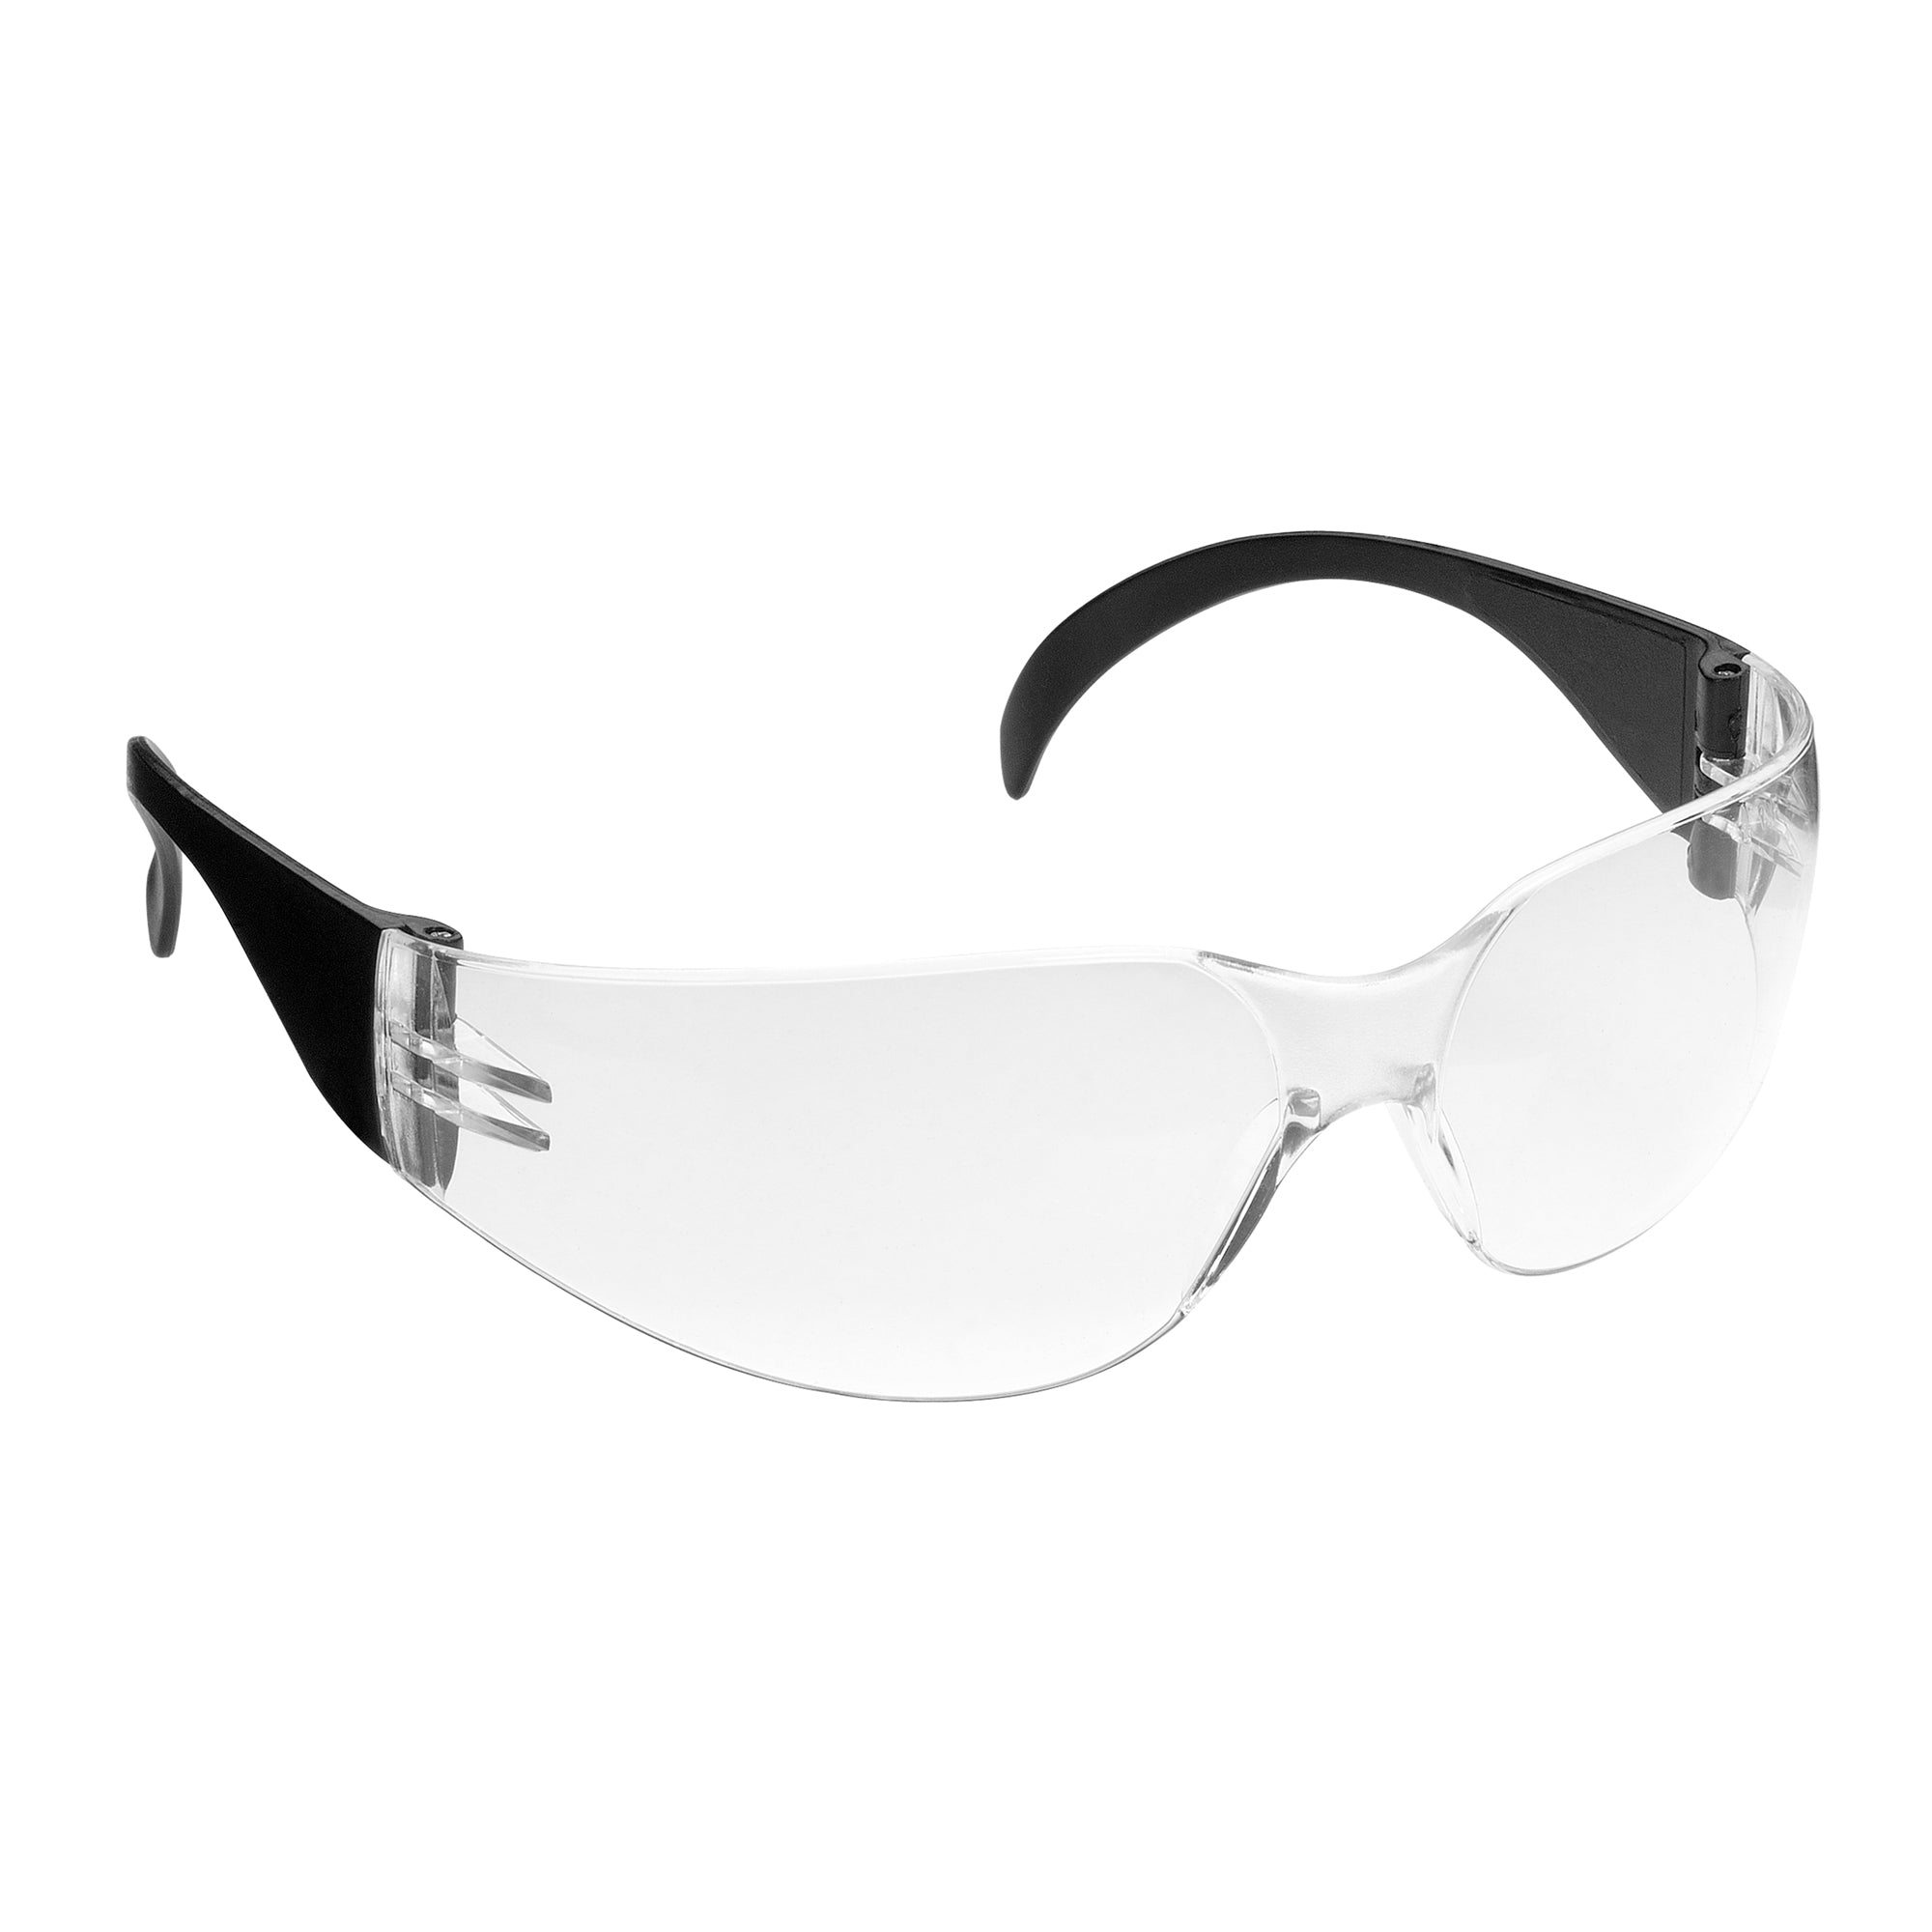 JSP M9400 Wraplite Safety Glasses - Clear/Smoke